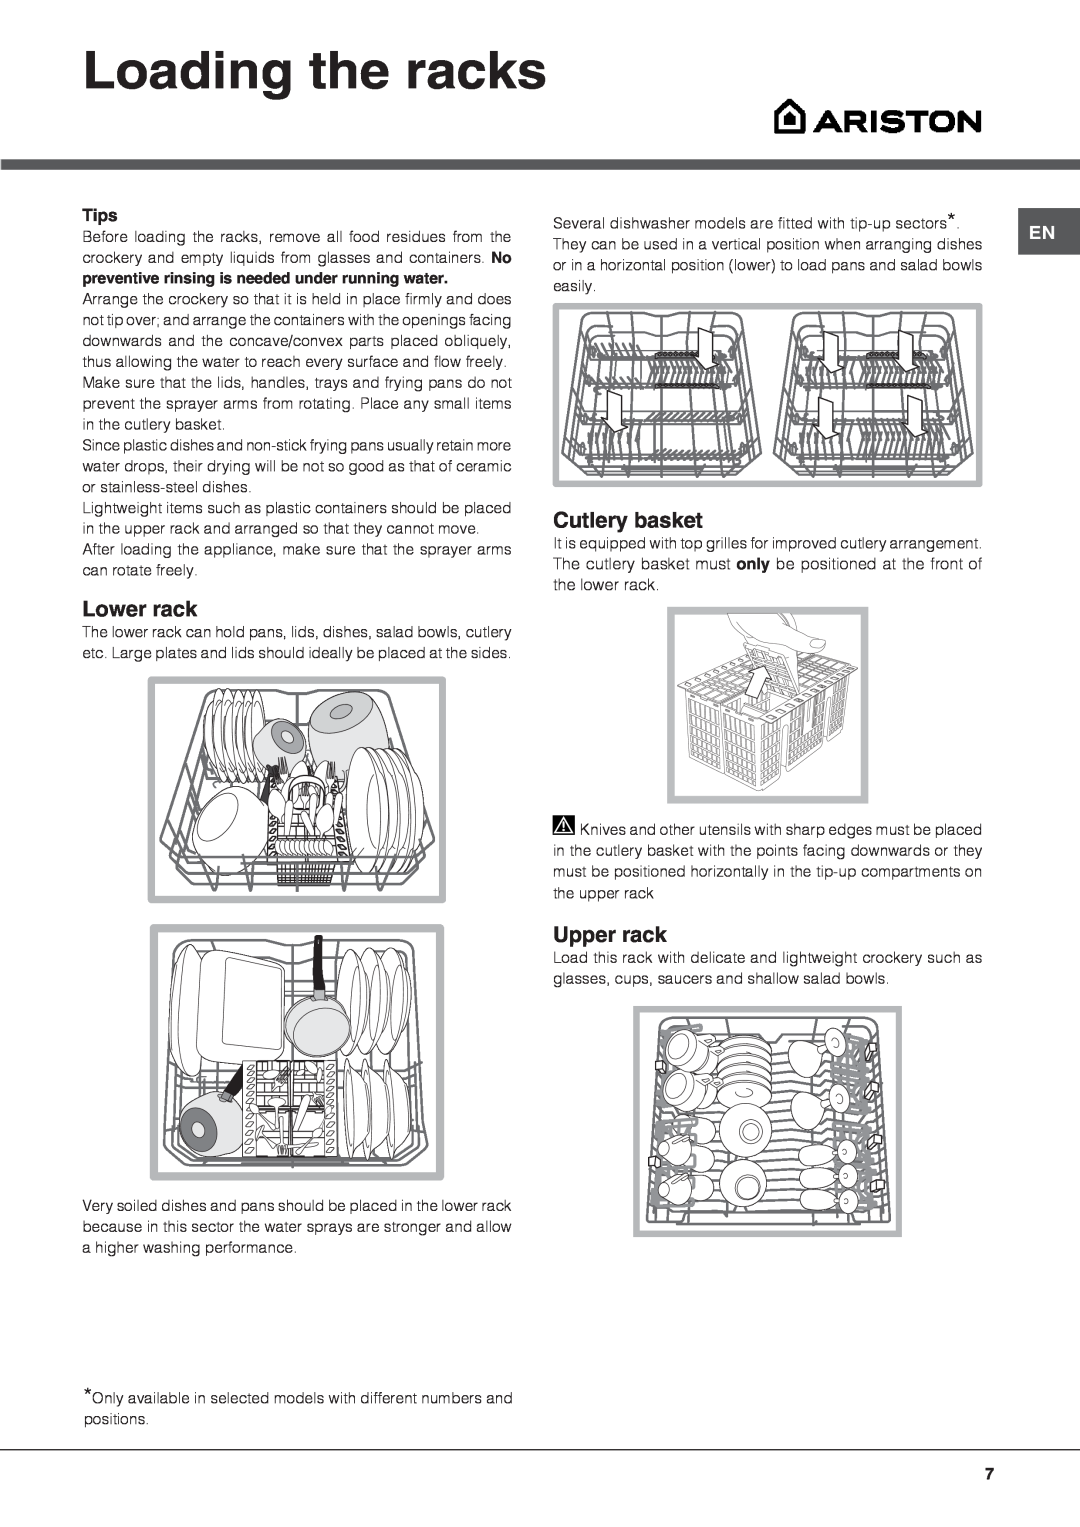 Ariston LFF 8M5 manual Loading the racks, Cutlery basket, Lower rack, Upper rack, Tips 